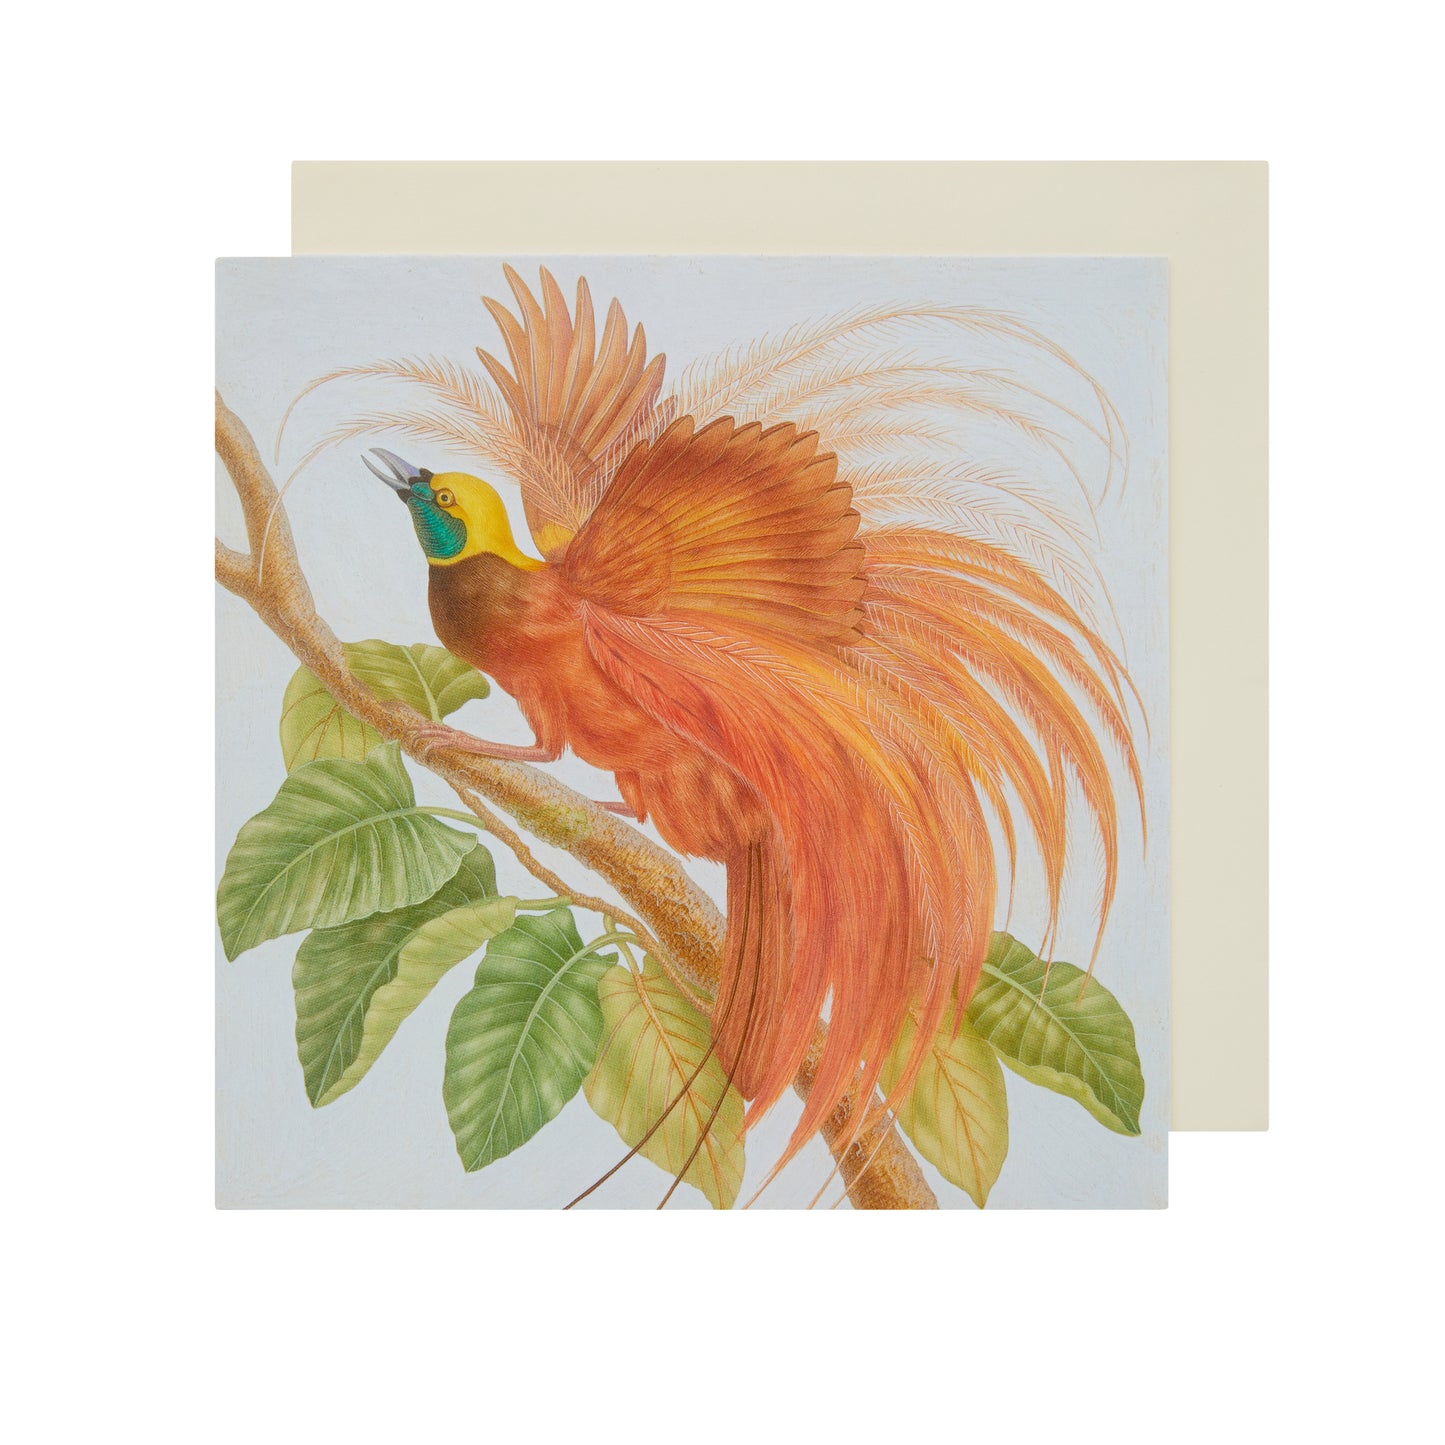 Count Raggi's Bird of Paradise - Greetings card